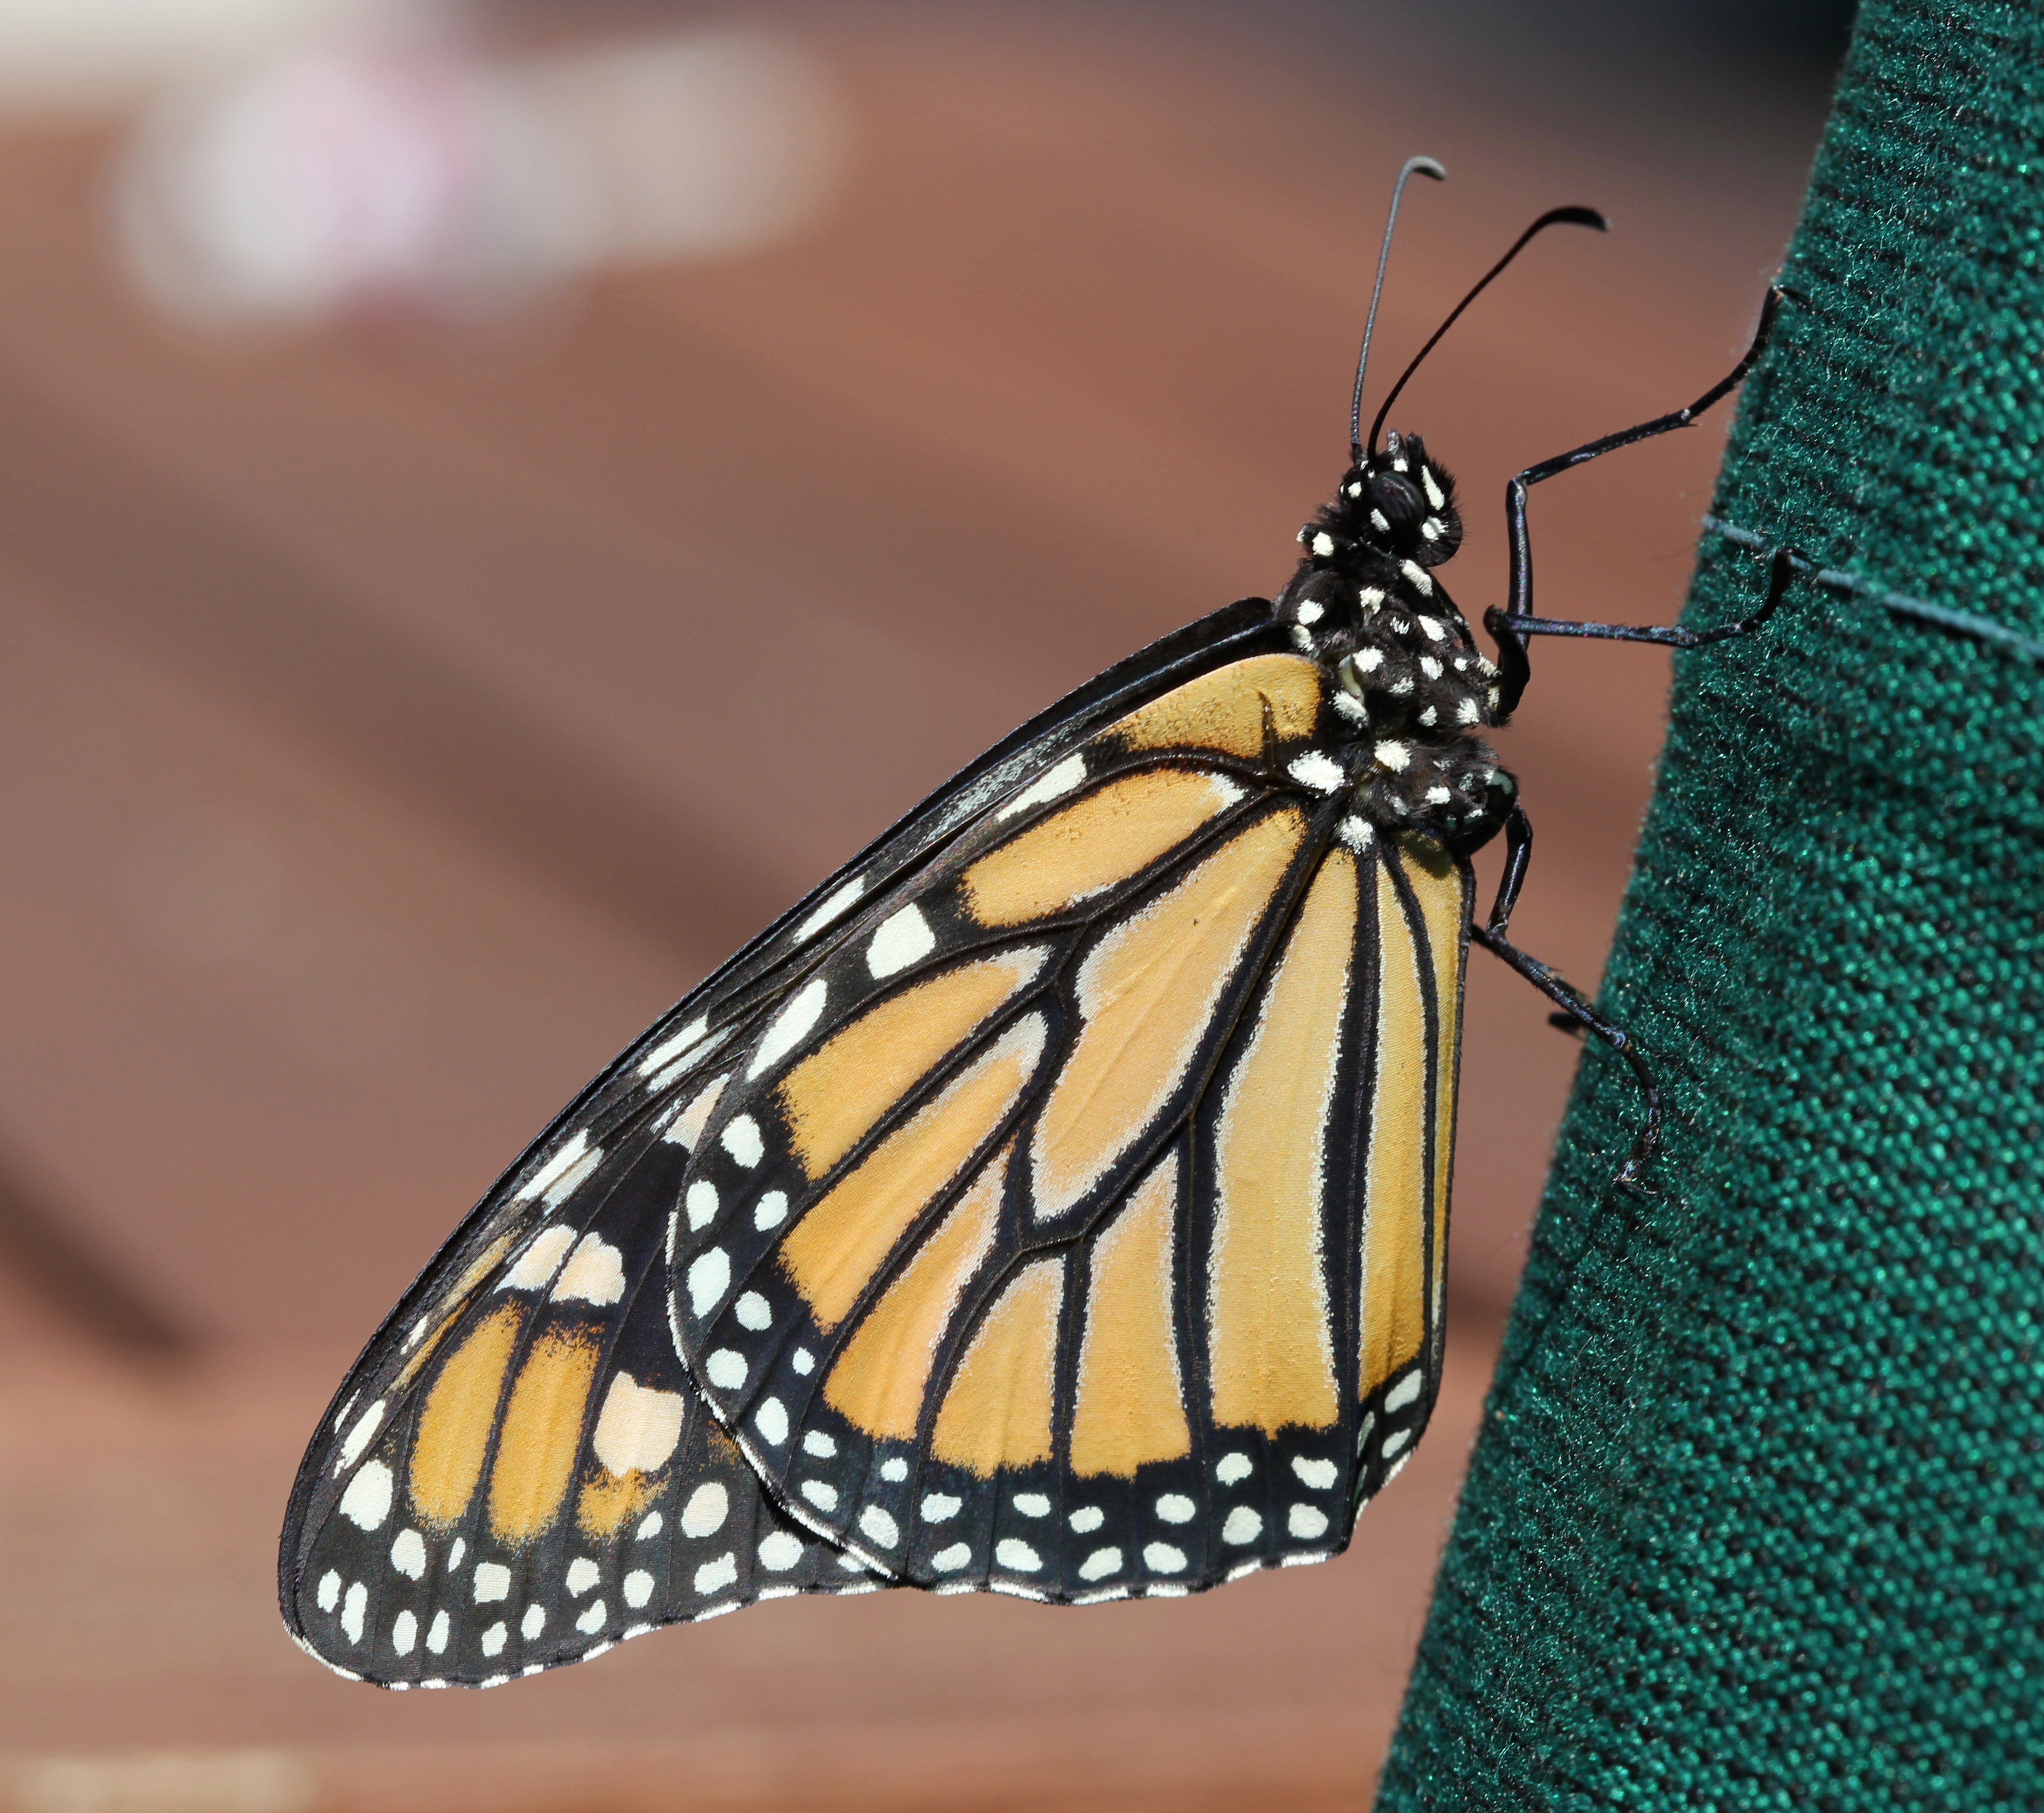 Male monarch butterfly (Danaus plexippus), about to take first flight